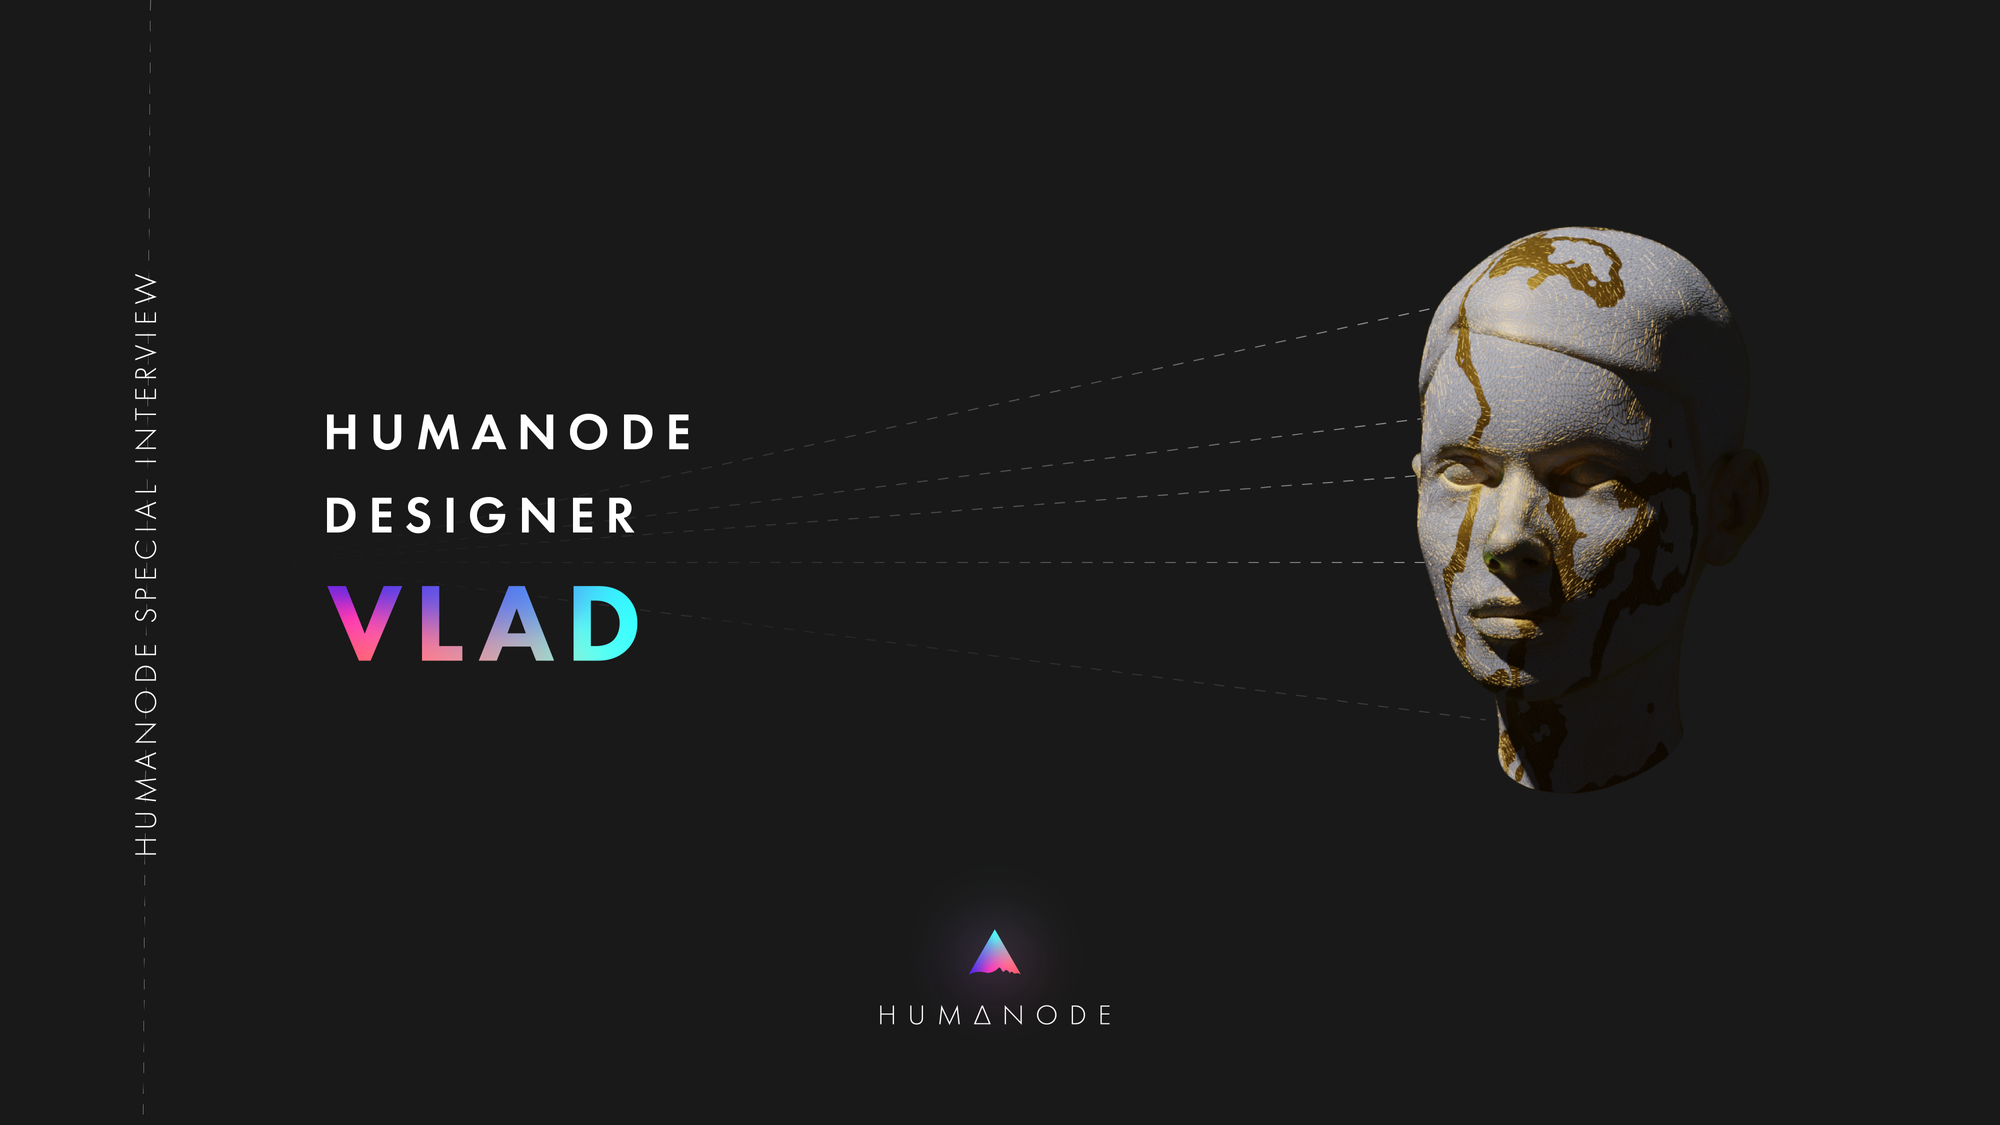 [Humanode Special Interview Series]: Vlad, designer at Humanode